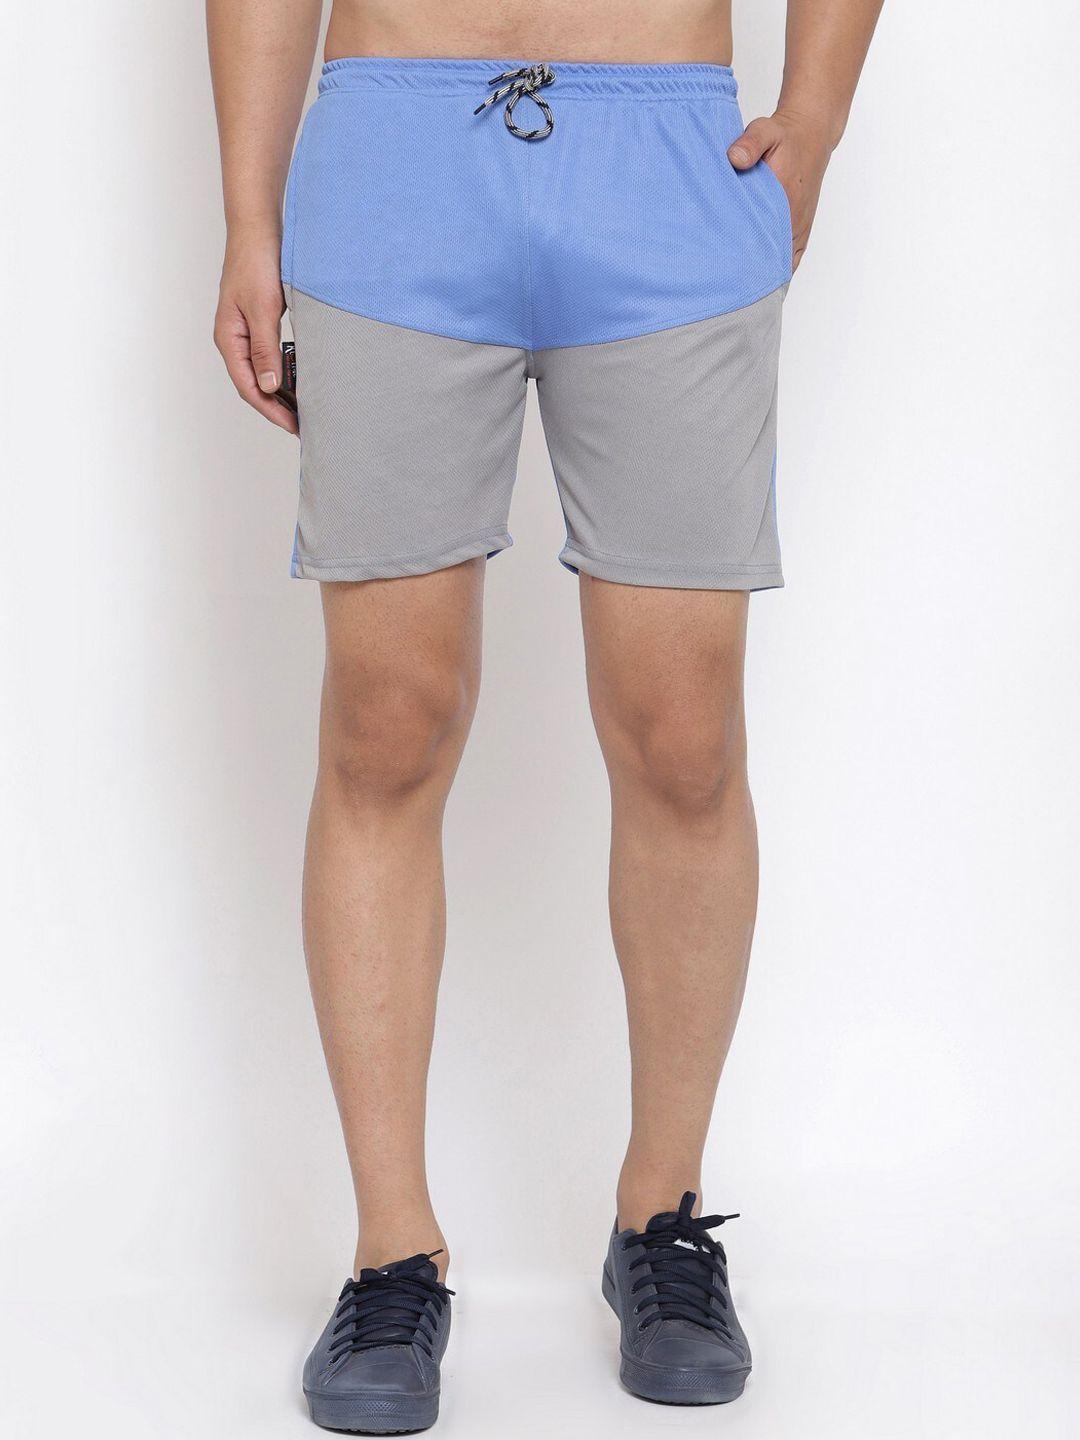 klotthe men colourblocked mid rise sport shorts with rapid dry technology